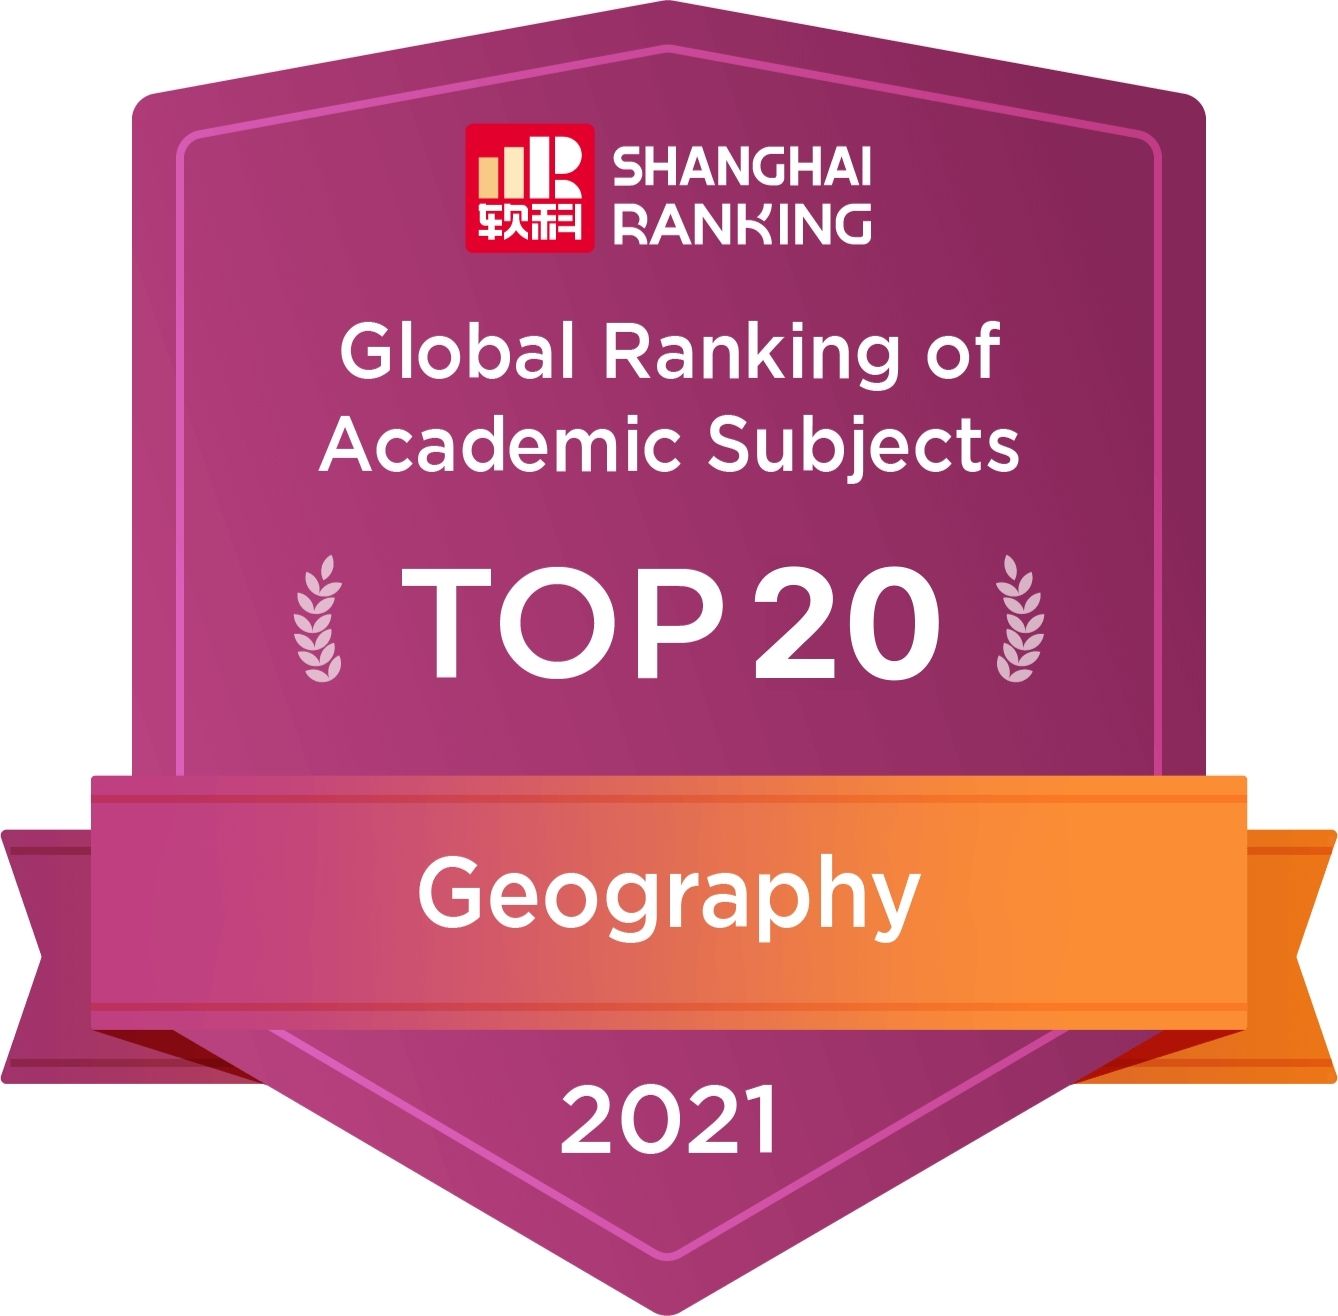 Geography - Shanghai 2021